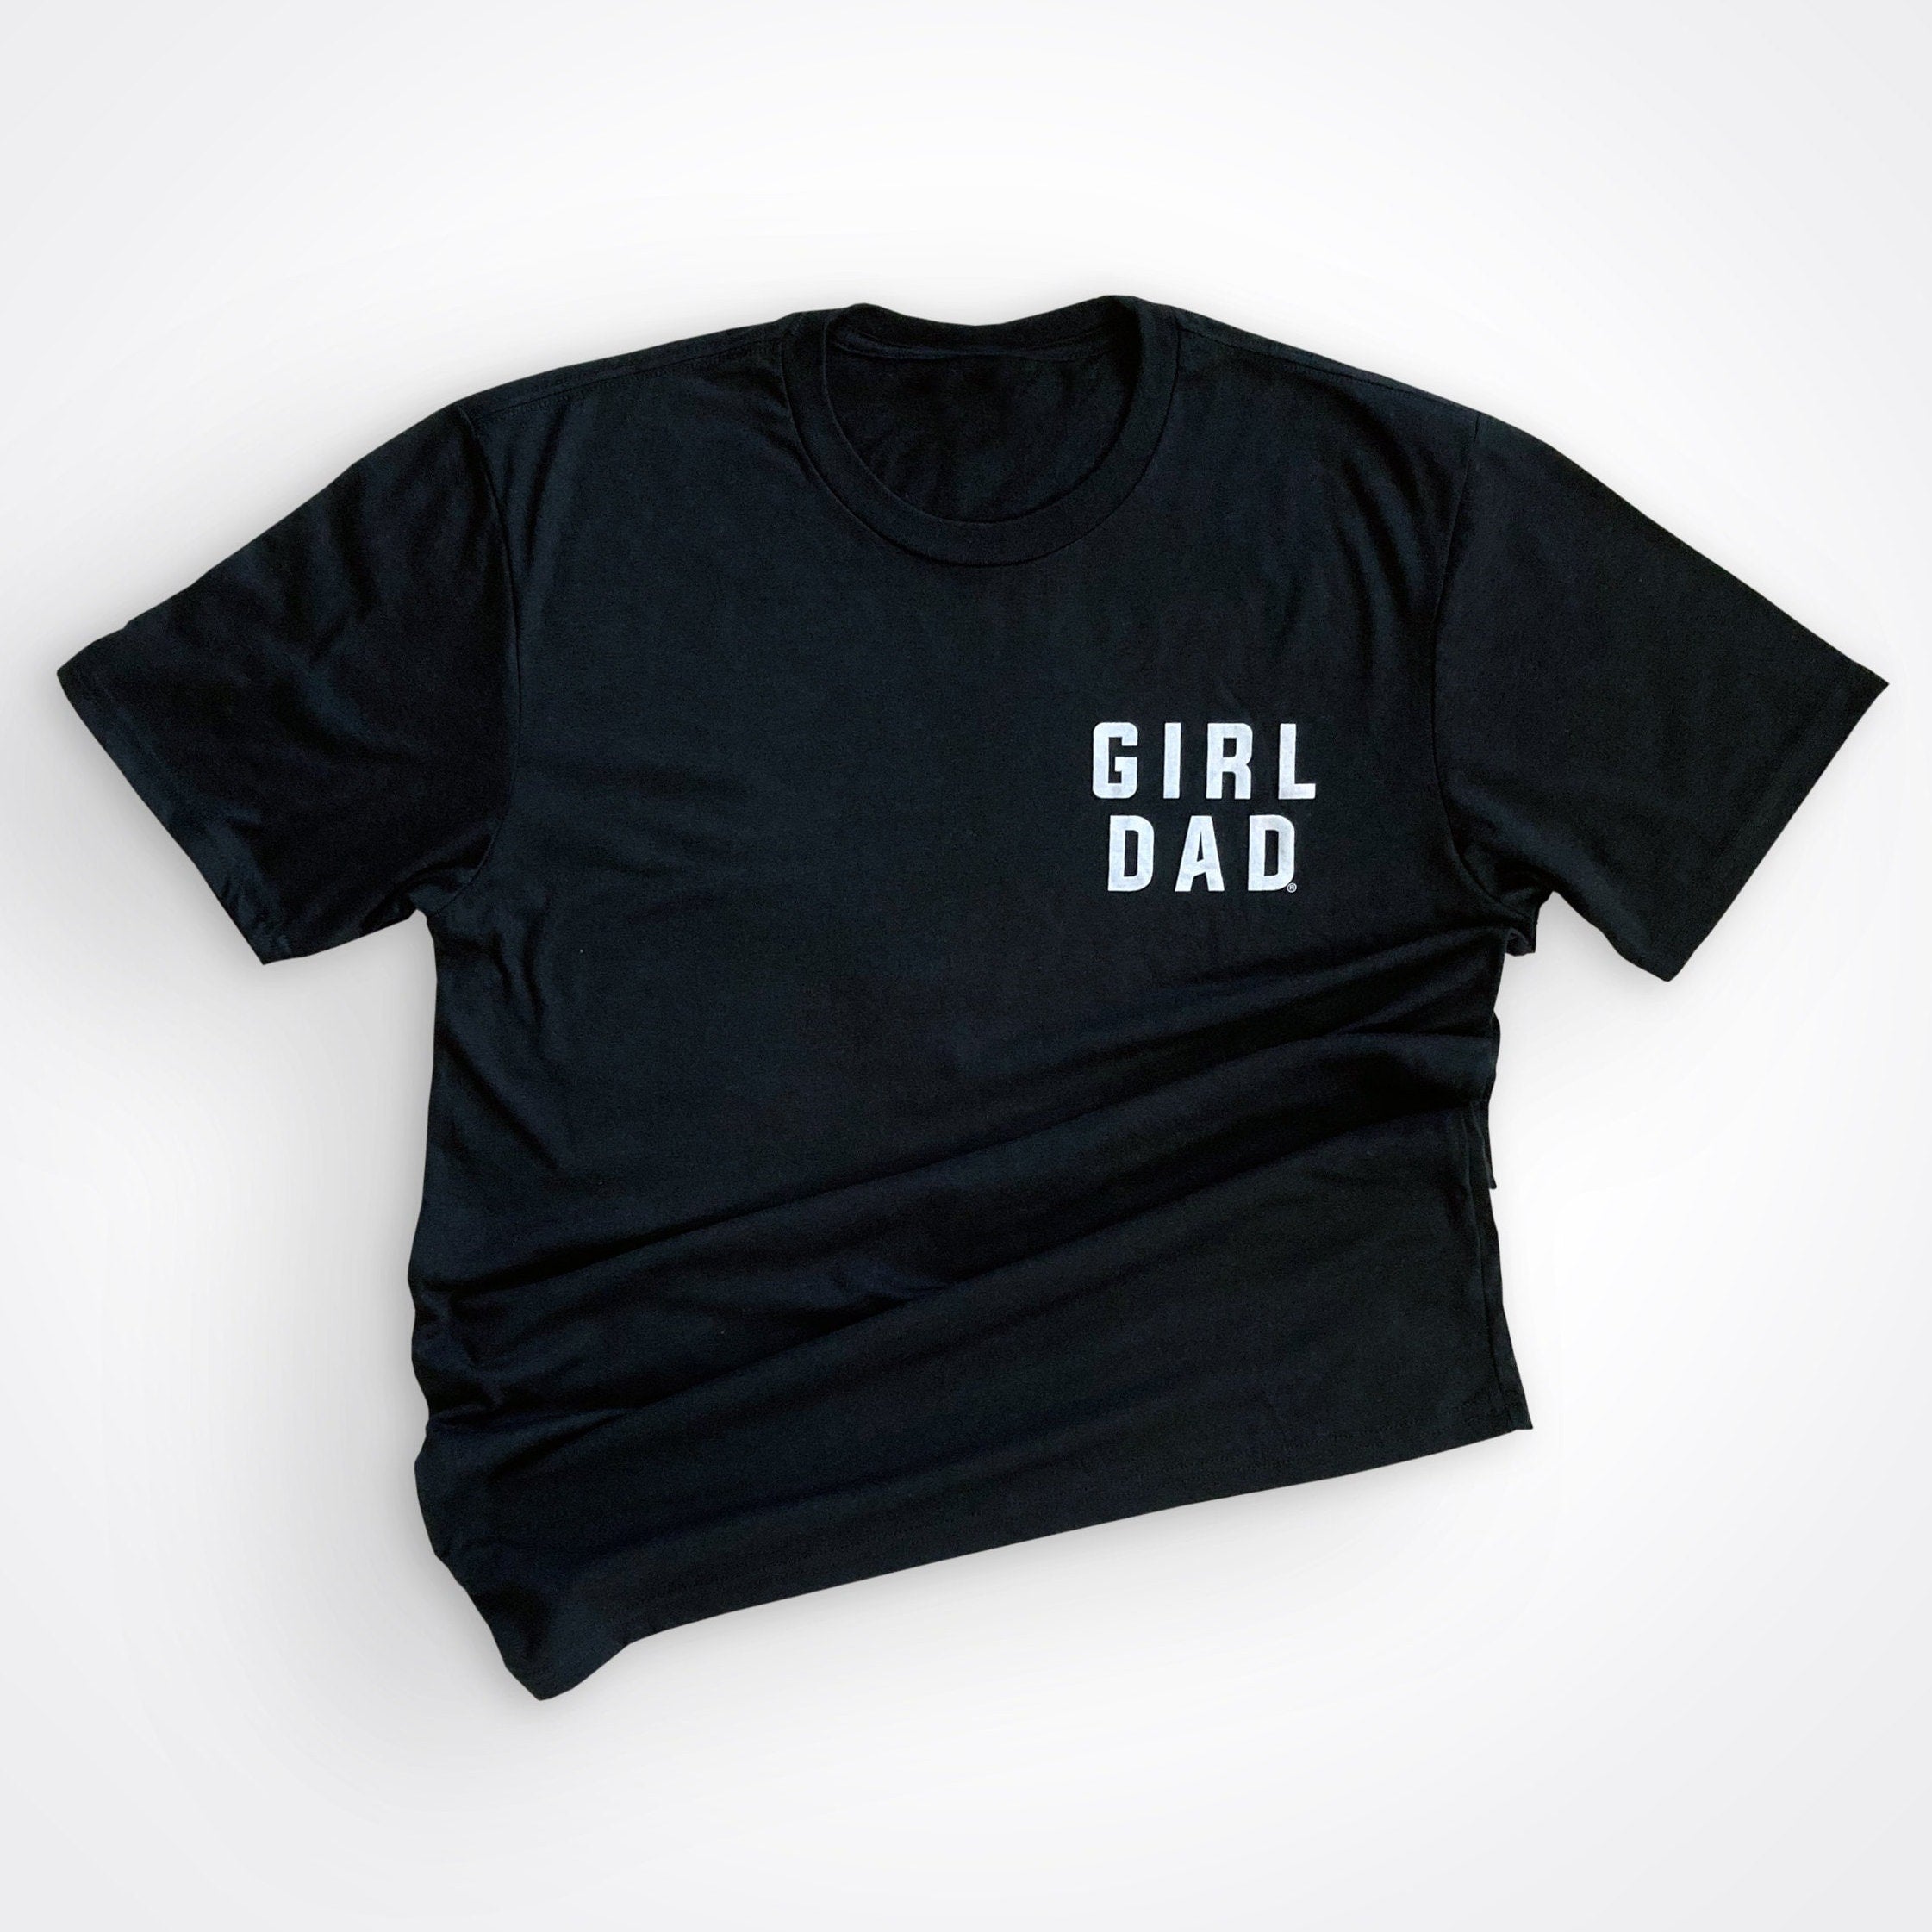 Girldad® Black Chest Logo Shirt